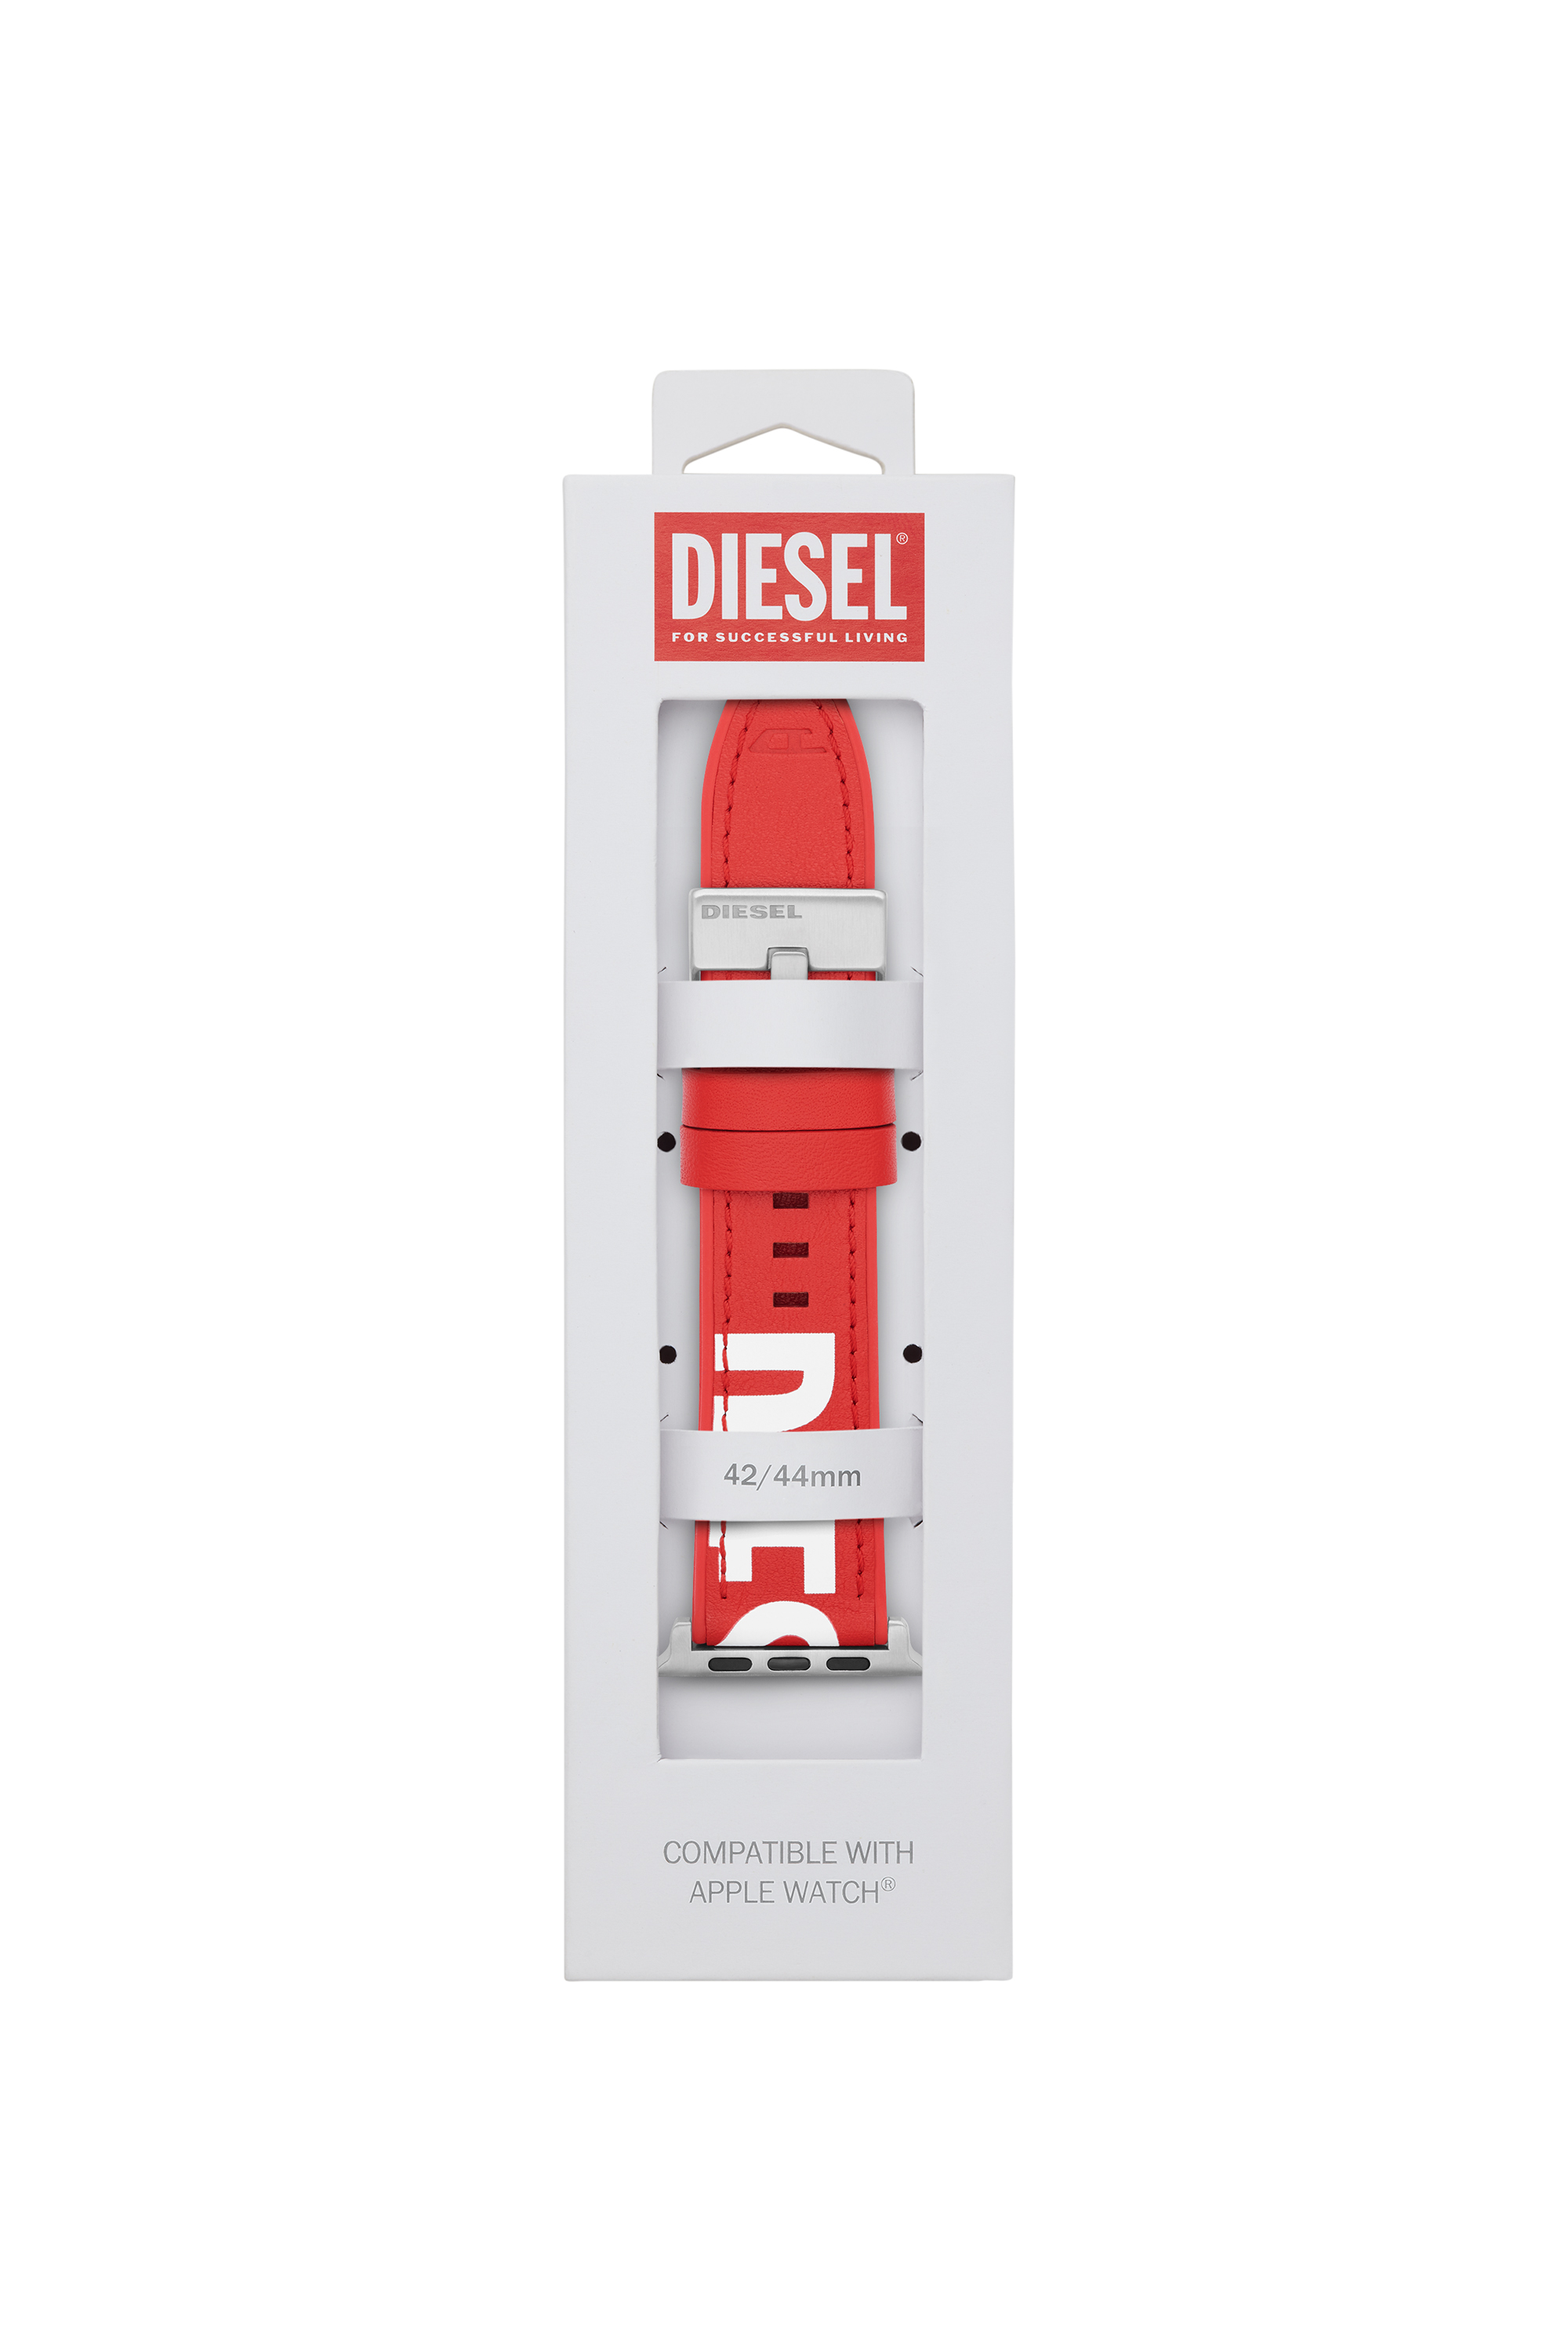 Diesel - DSS003, レッド - Image 2